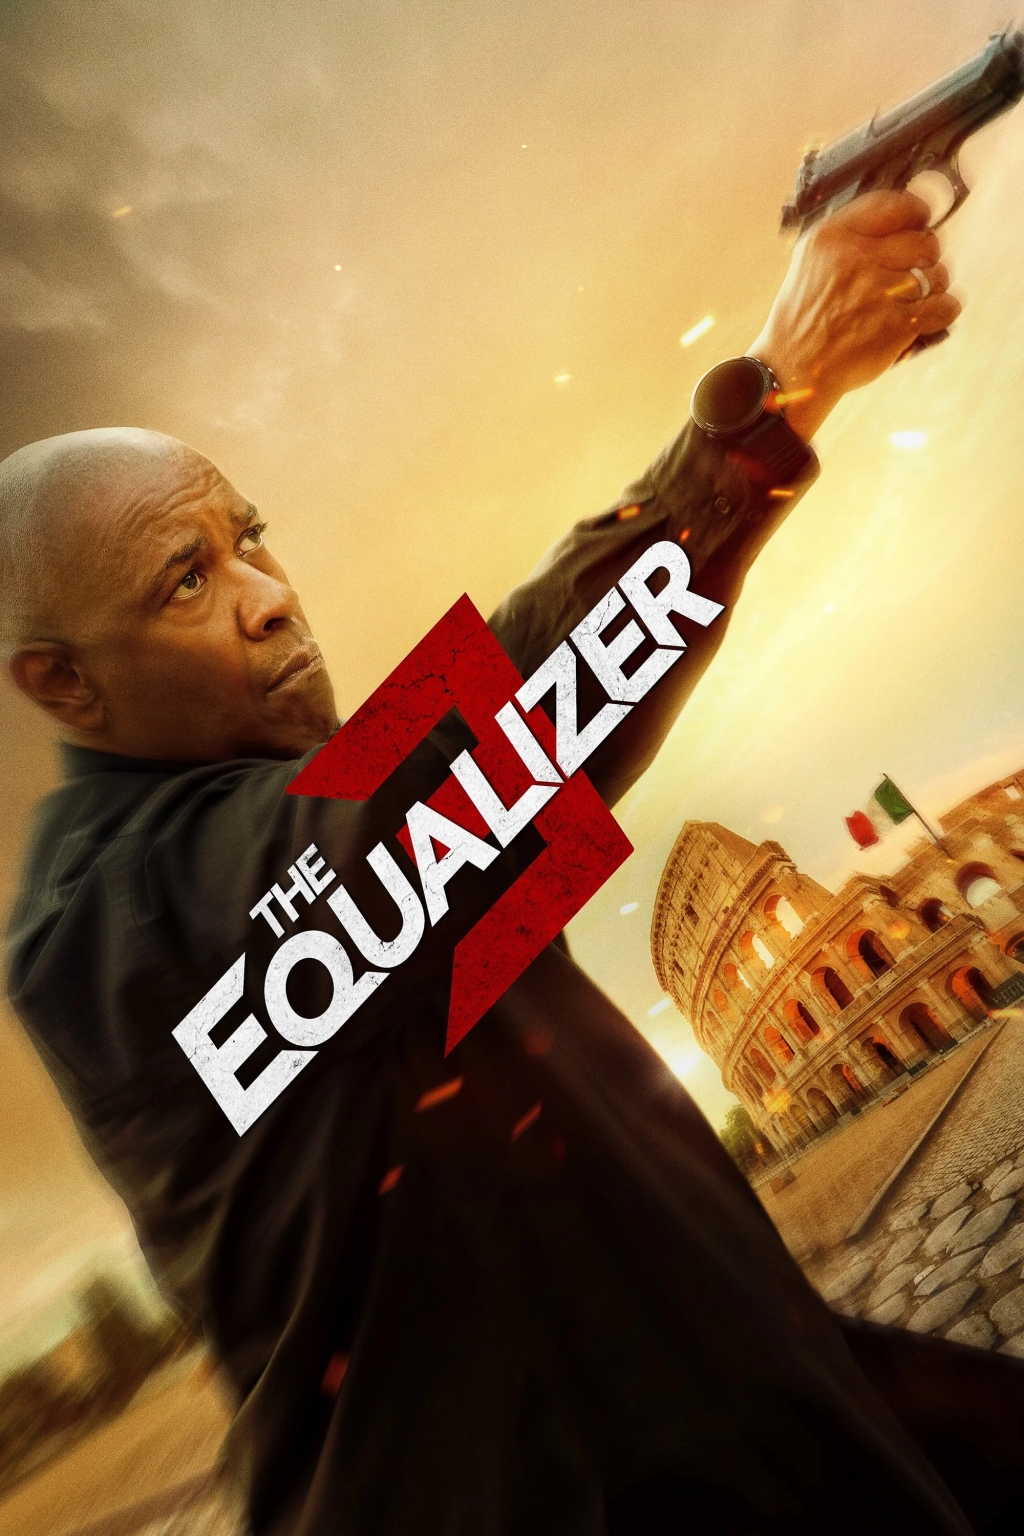 The Equalizer 3 – Quite a good movie.